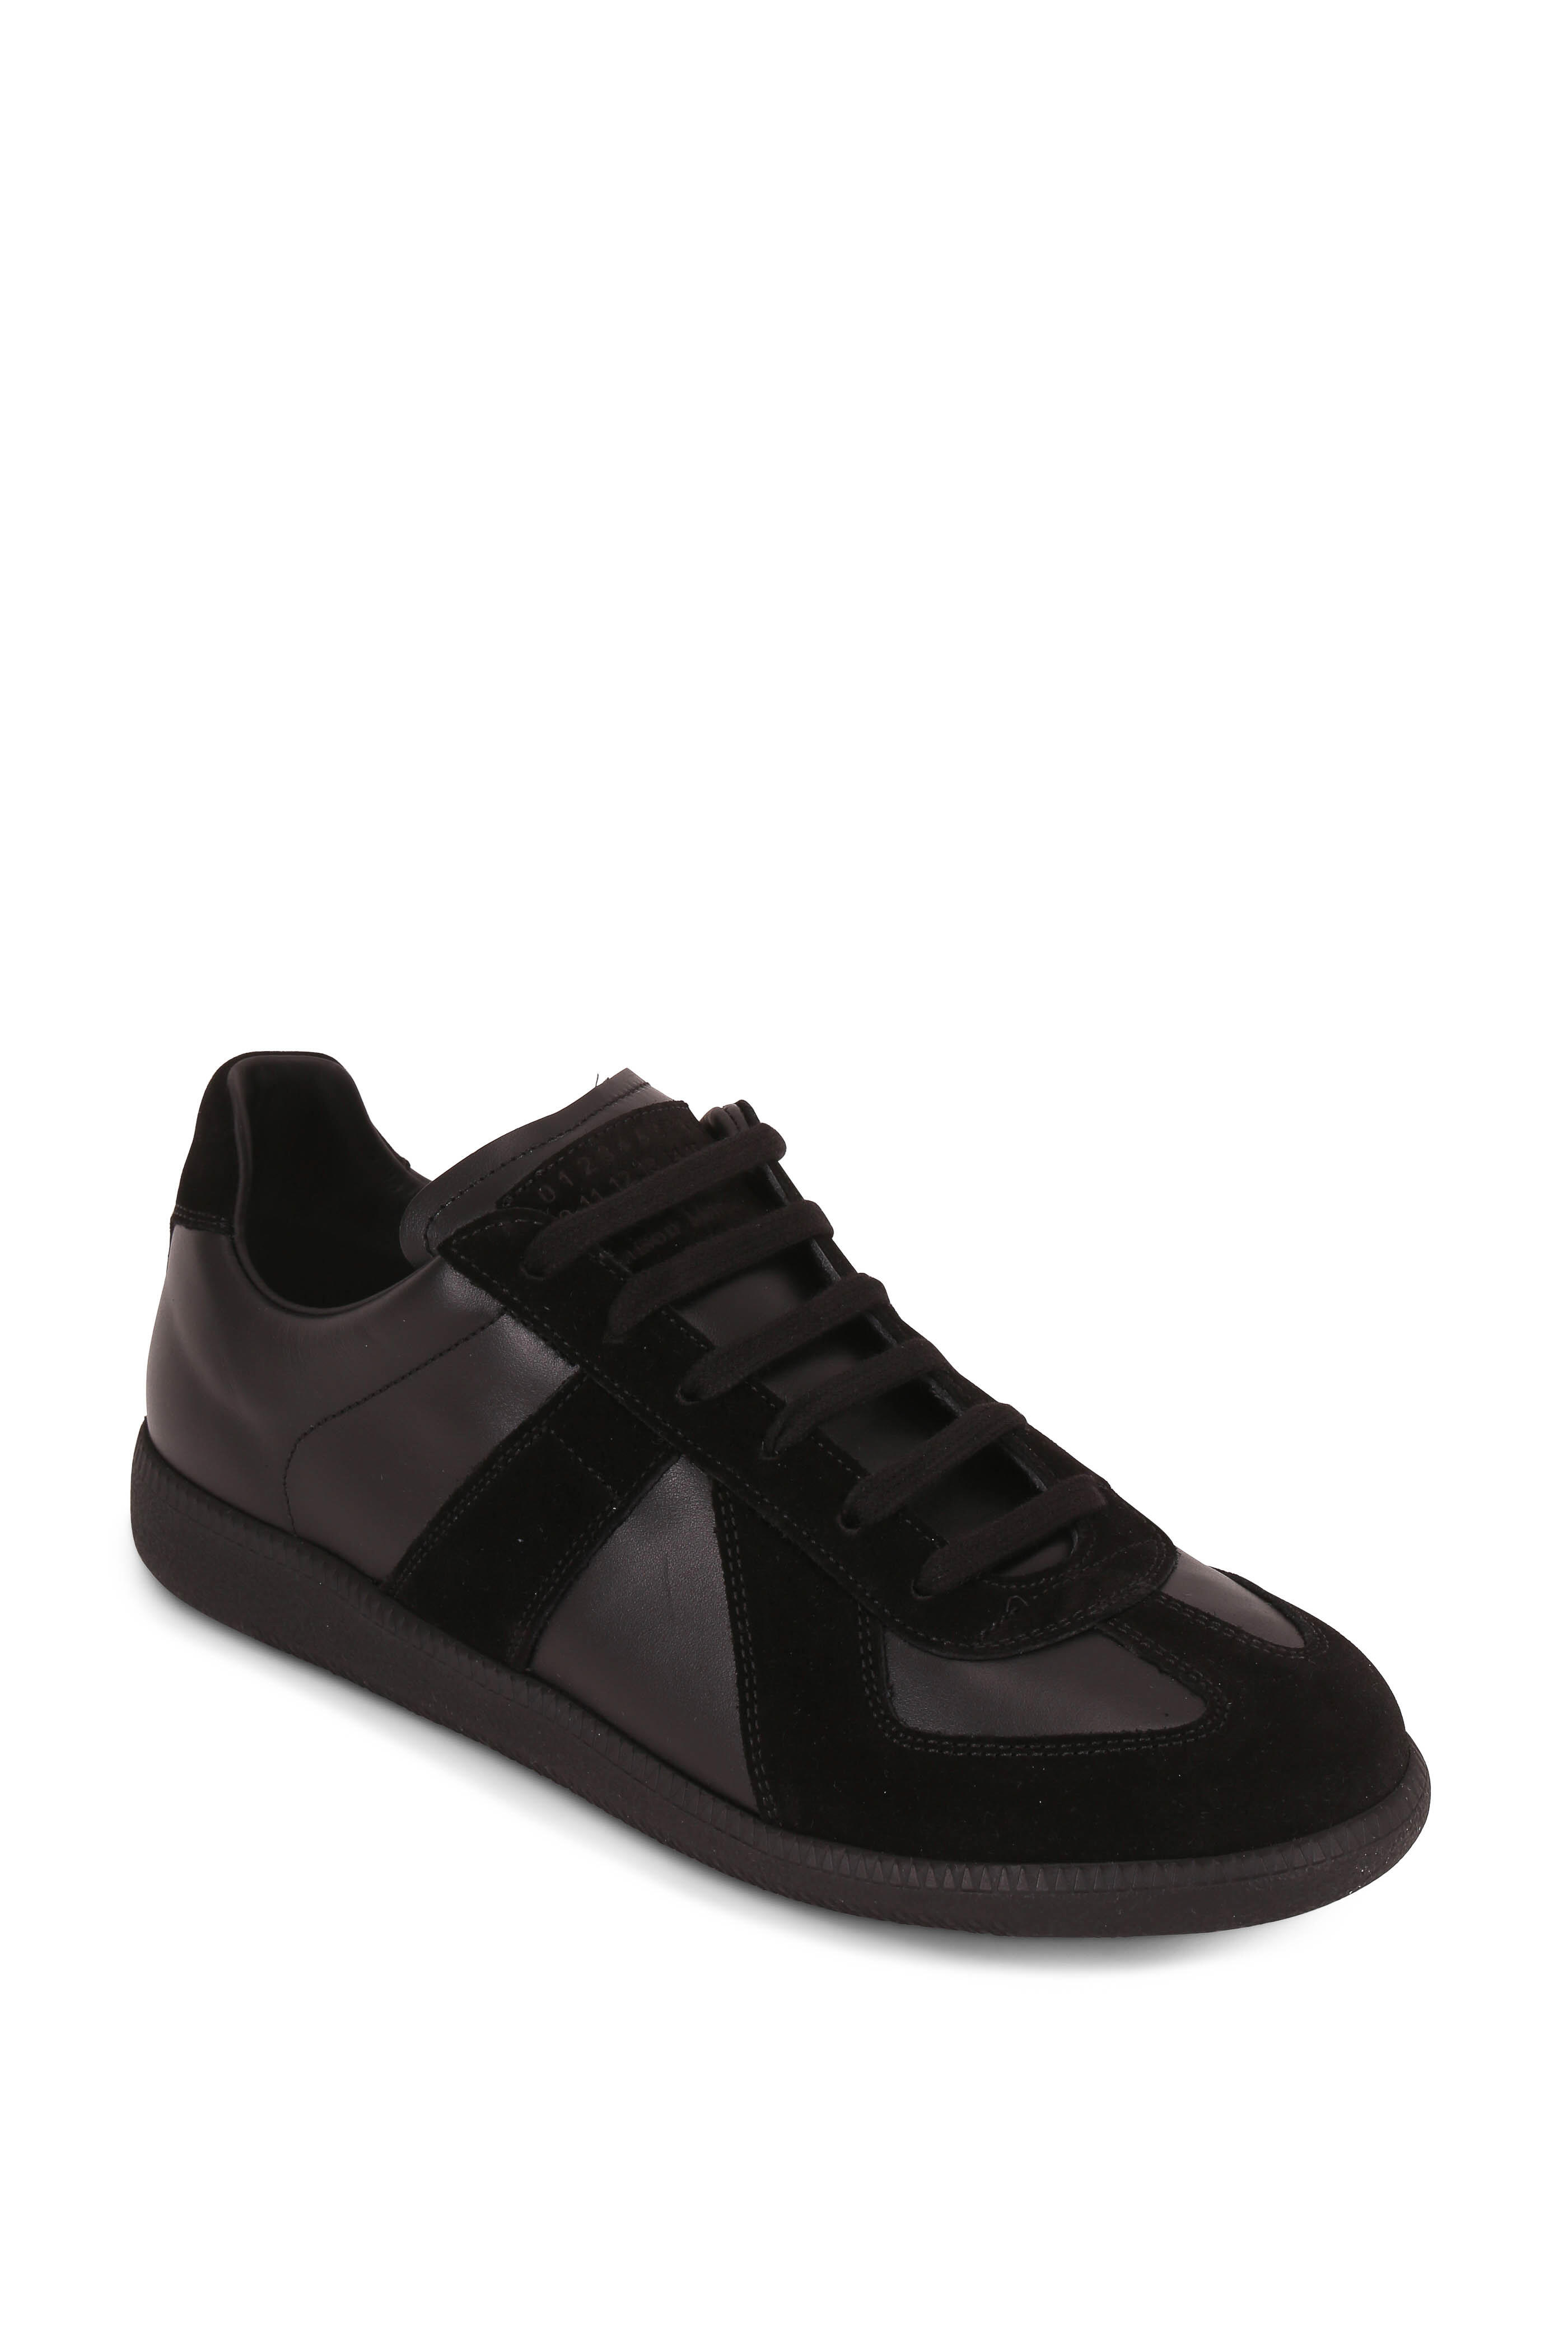 Maison Margiela - Replica Black Leather Suede Low Sneaker